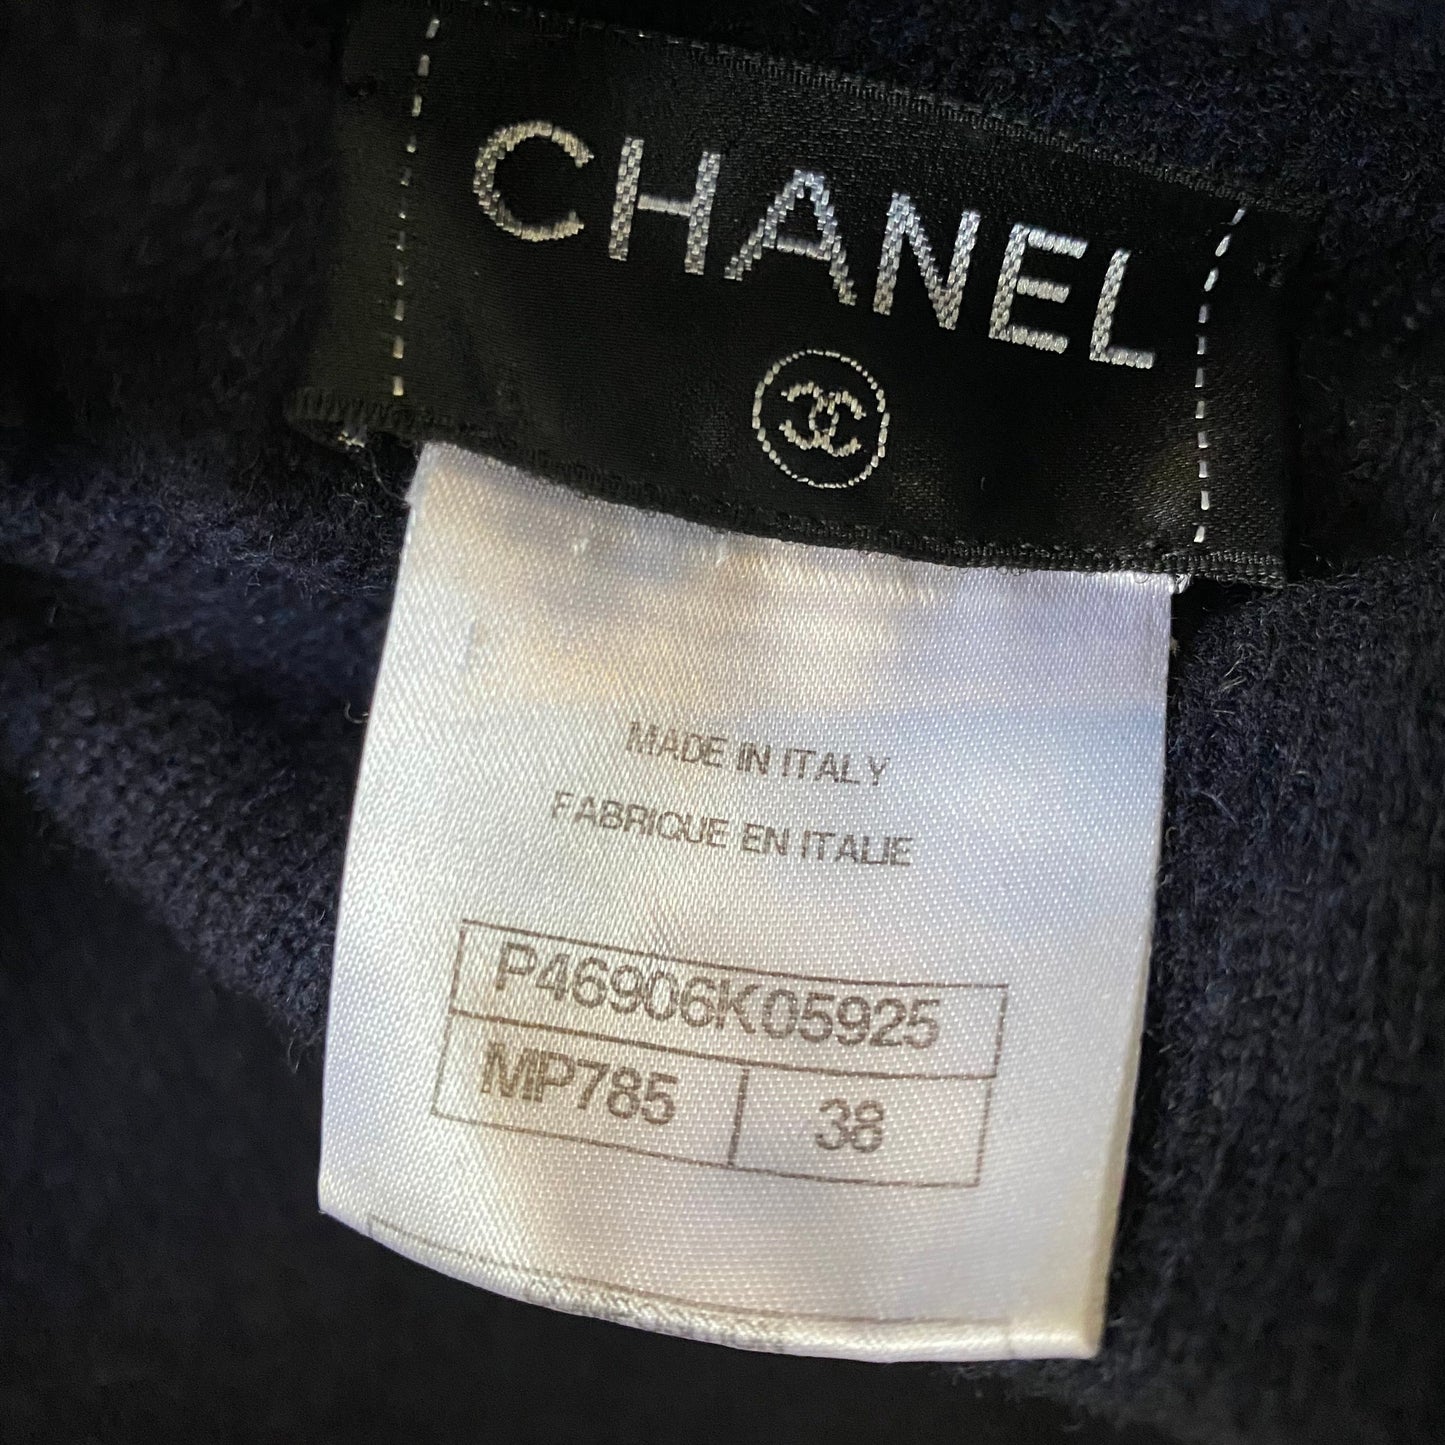 Lysis vintage Chanel winter wool dress  - S - 2000s